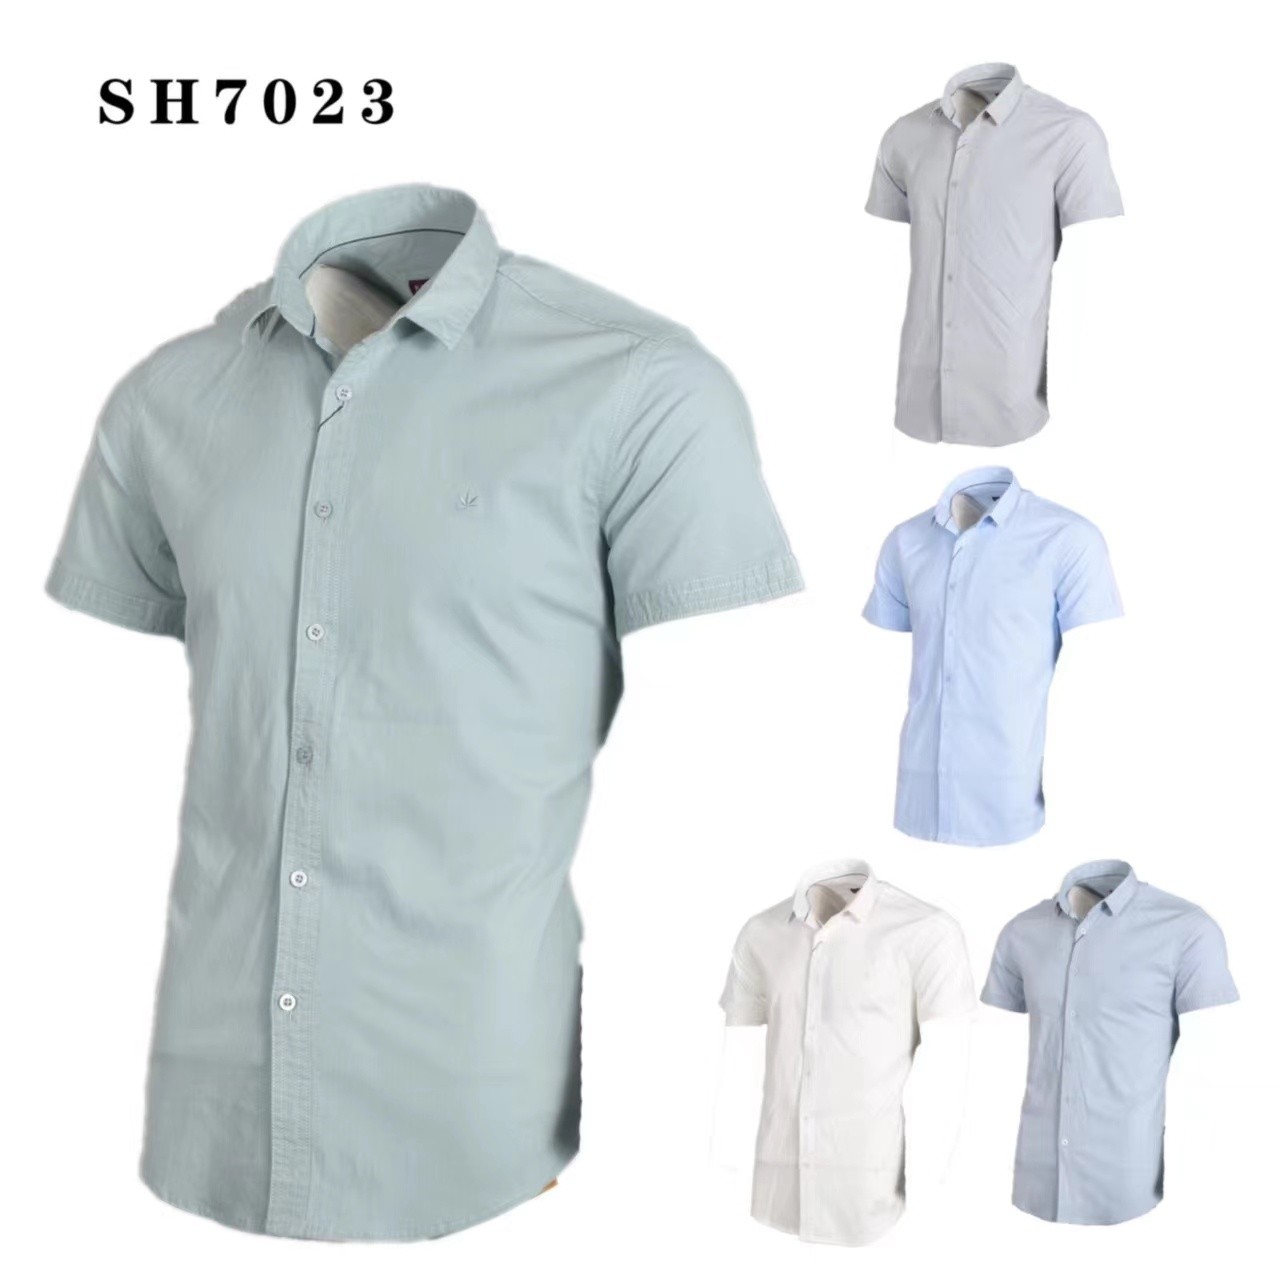 Plain Short Sleeve Shirt Cotton Wear For Men